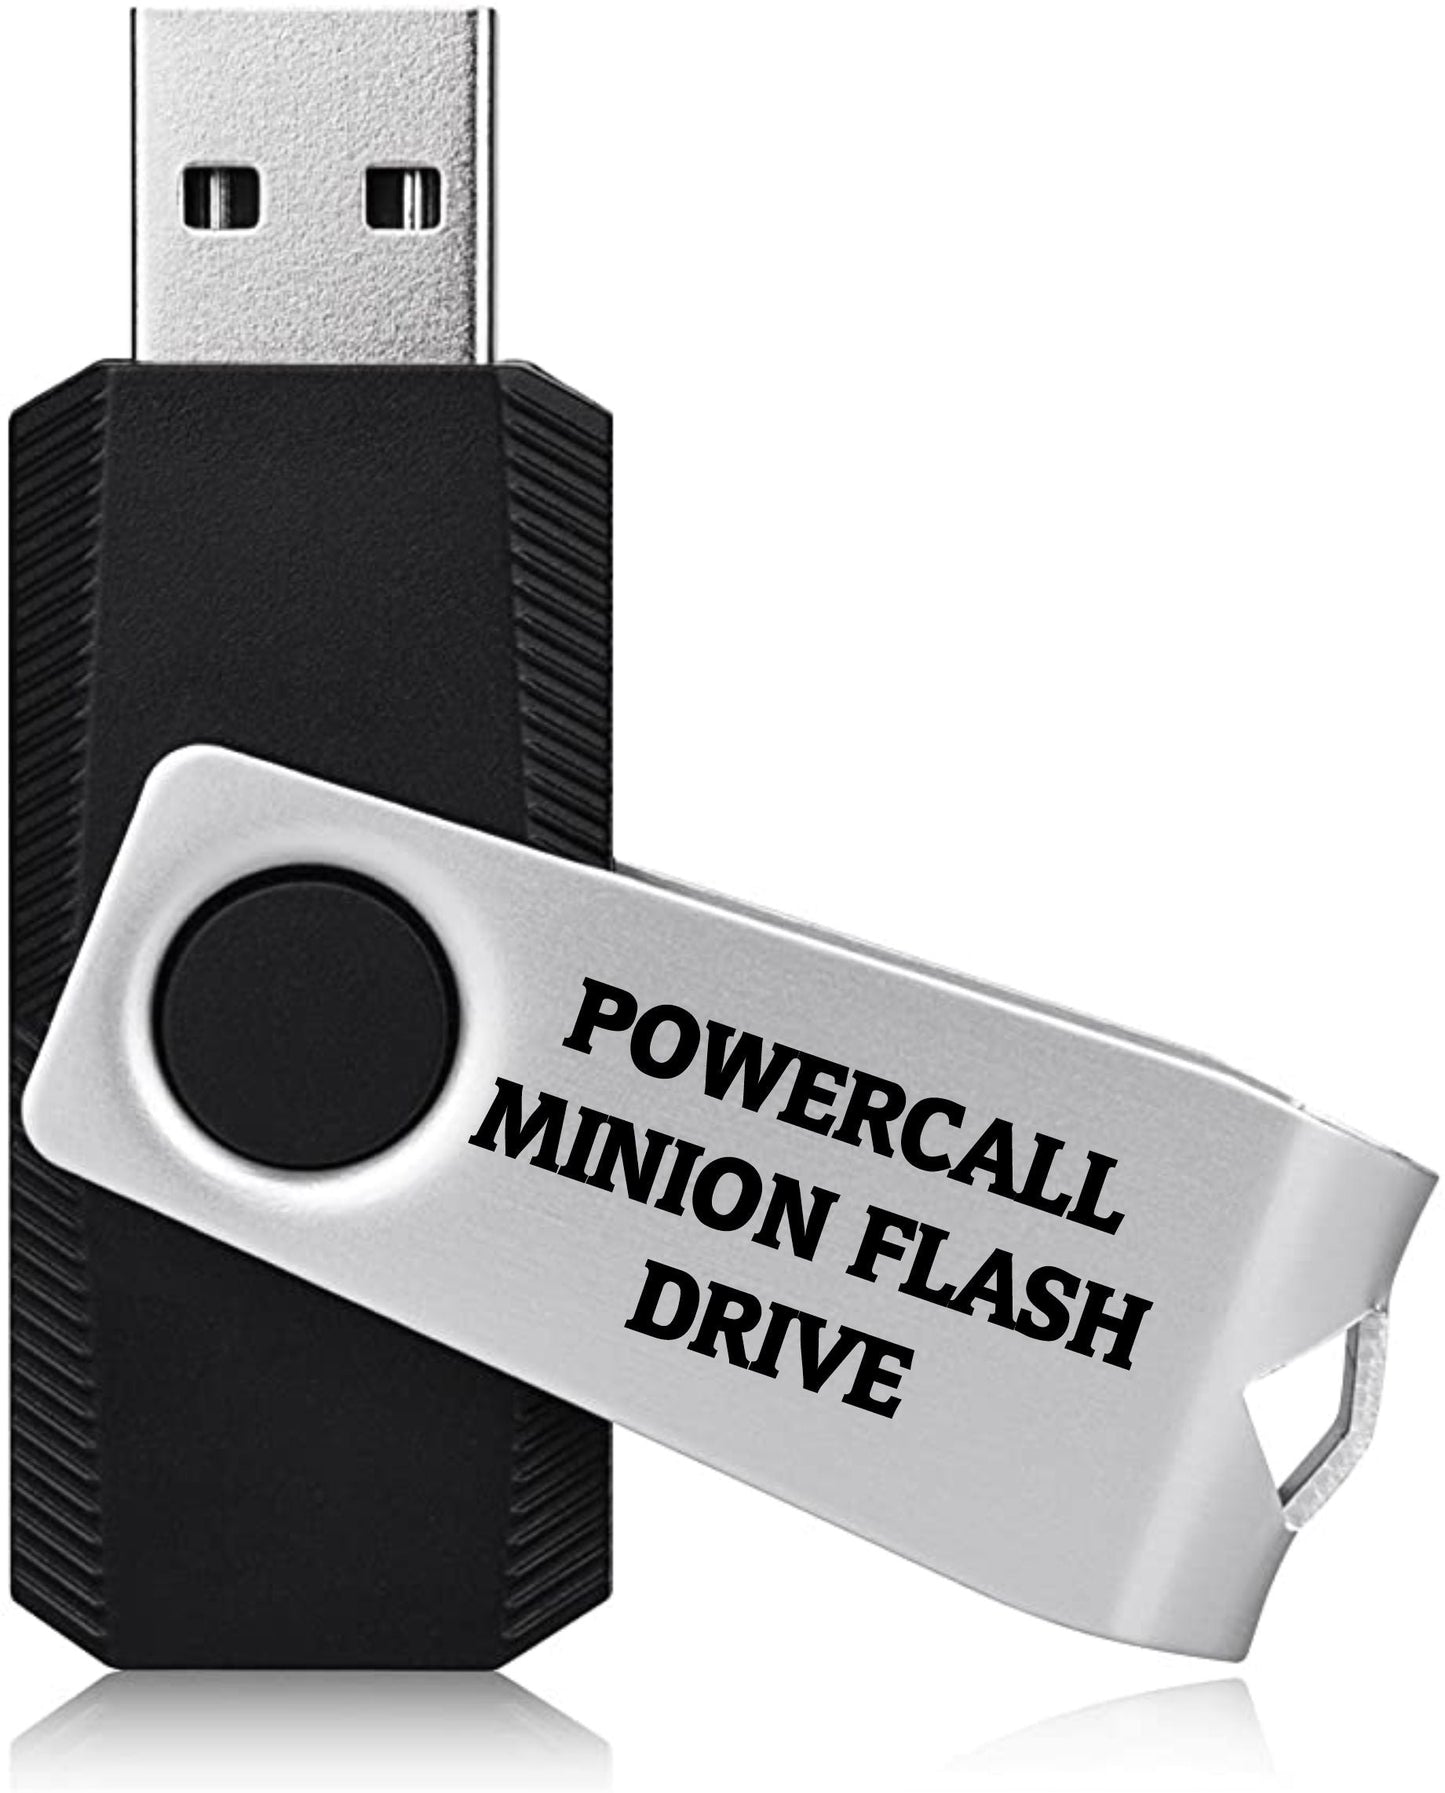 Powercall Minion Bee-Doh Flash Drive - Powercall Sirens LLC